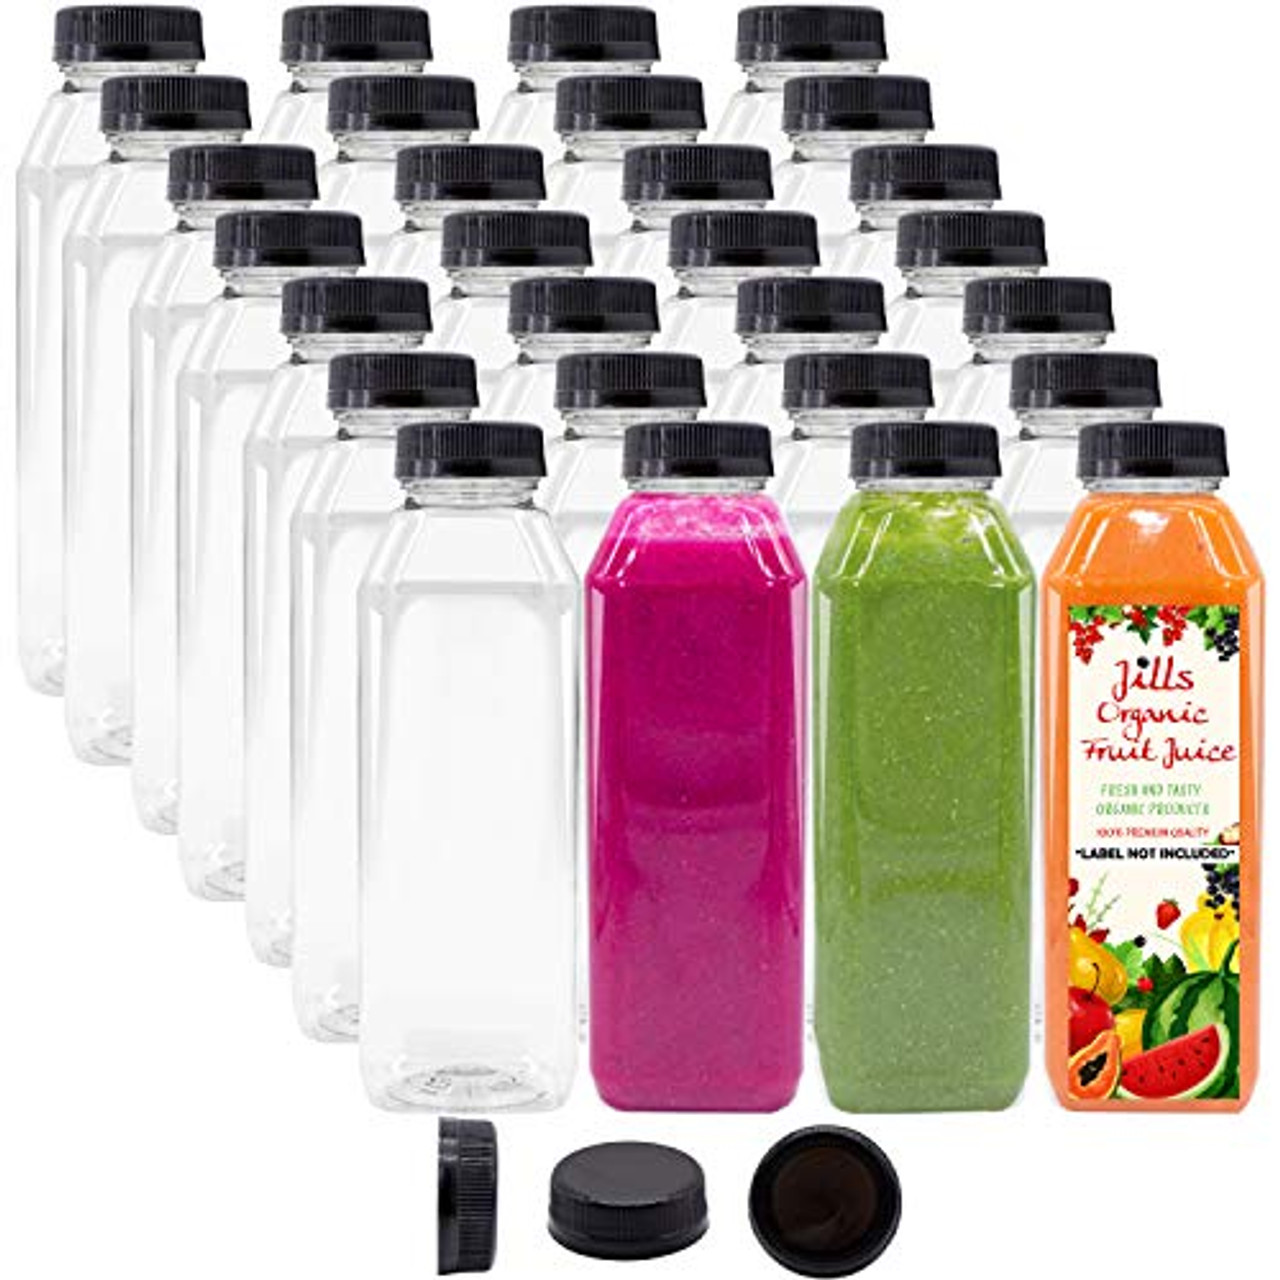 200 Pack] 16 oz Empty Plastic Juice Bottles with Tamper Evident